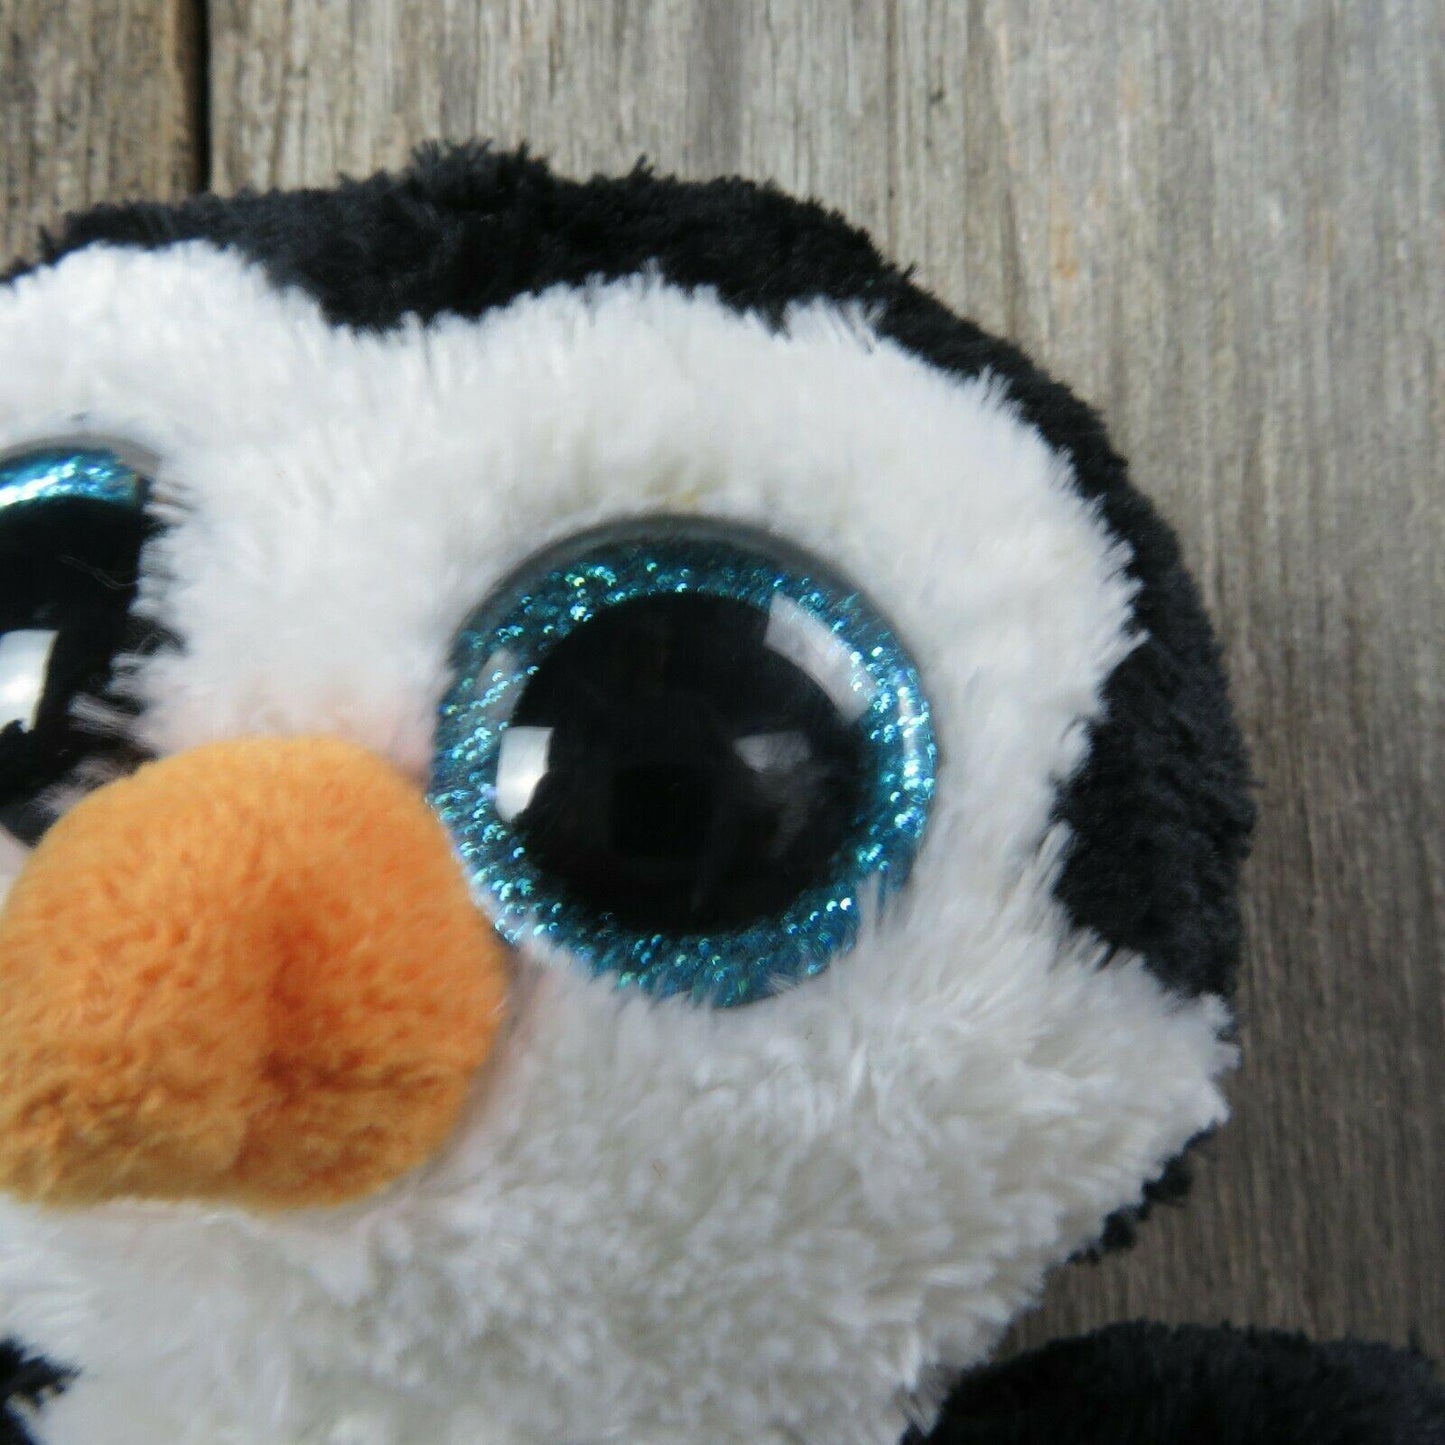 Penguin Plush Ty Beanie Boos Plush Waddles Blue Glitter Eyes Stuffed Animal